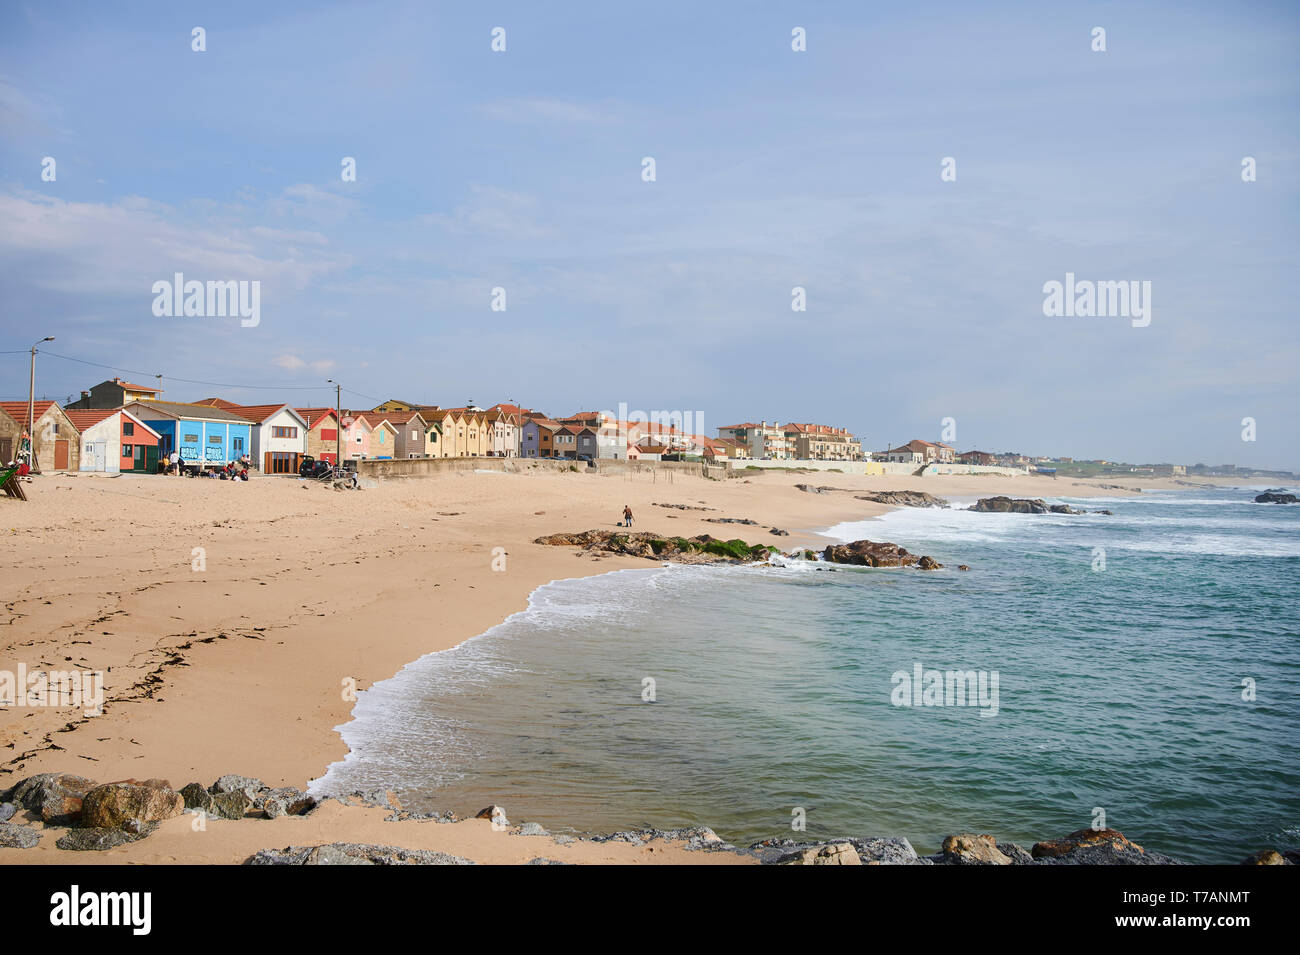 Fislhermans village near the beach in Vila Chá Portugal on a sunny day. Stock Photo